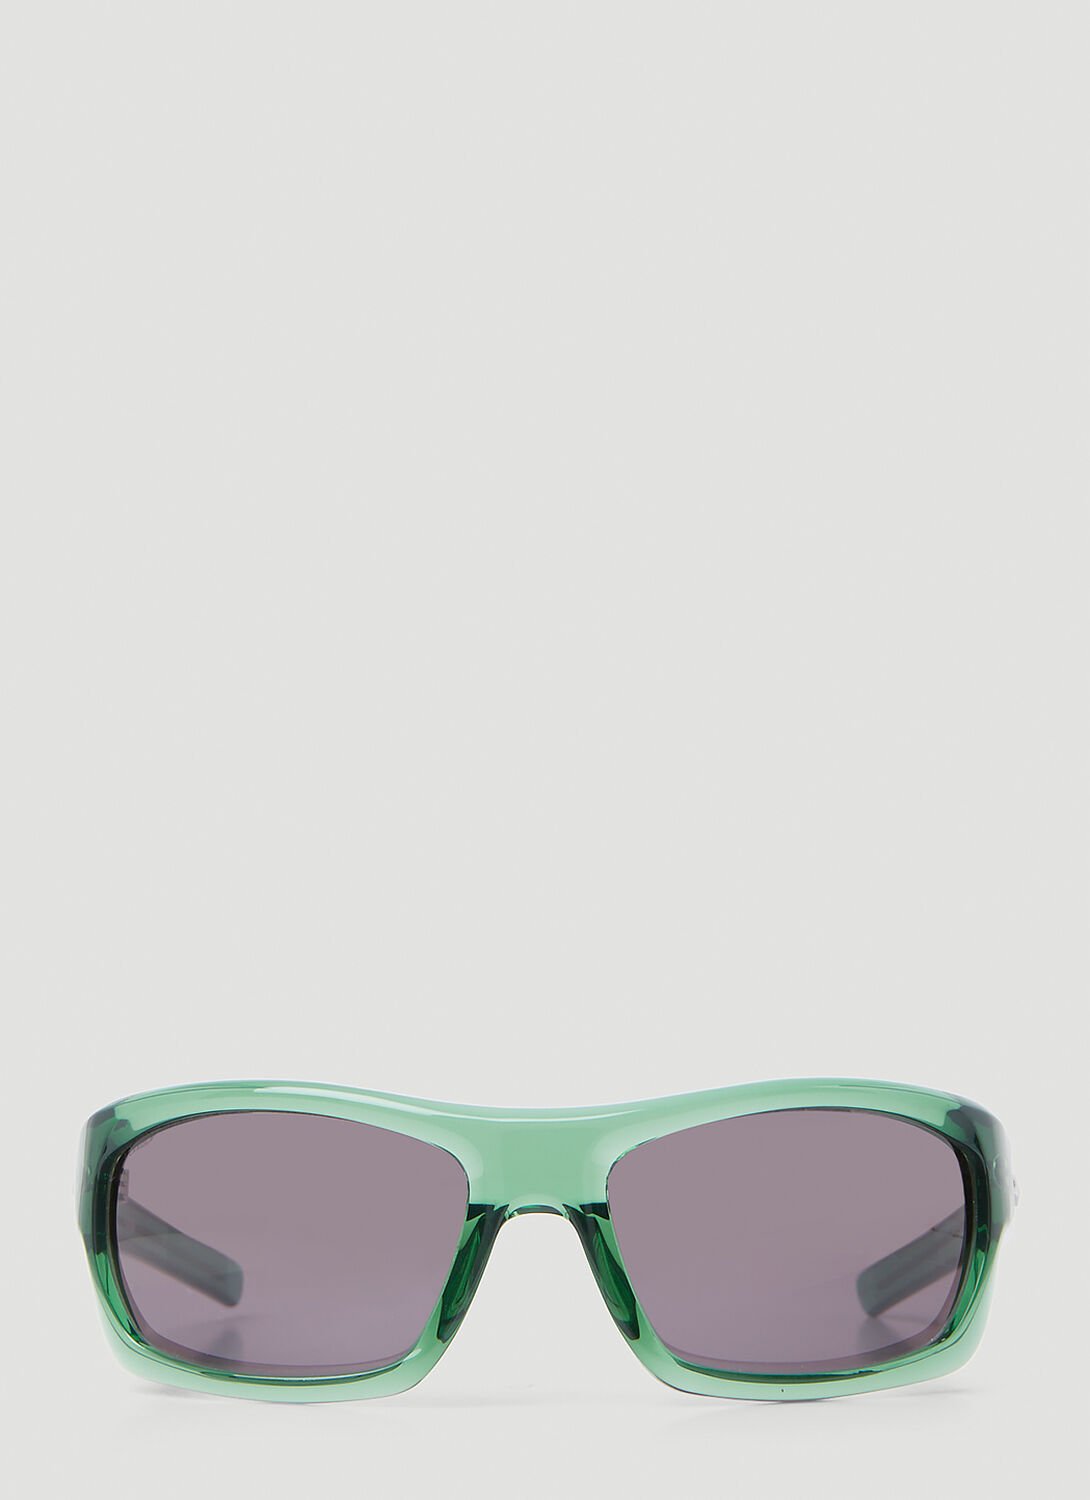 Lexxola Neo Sunglasses In Green